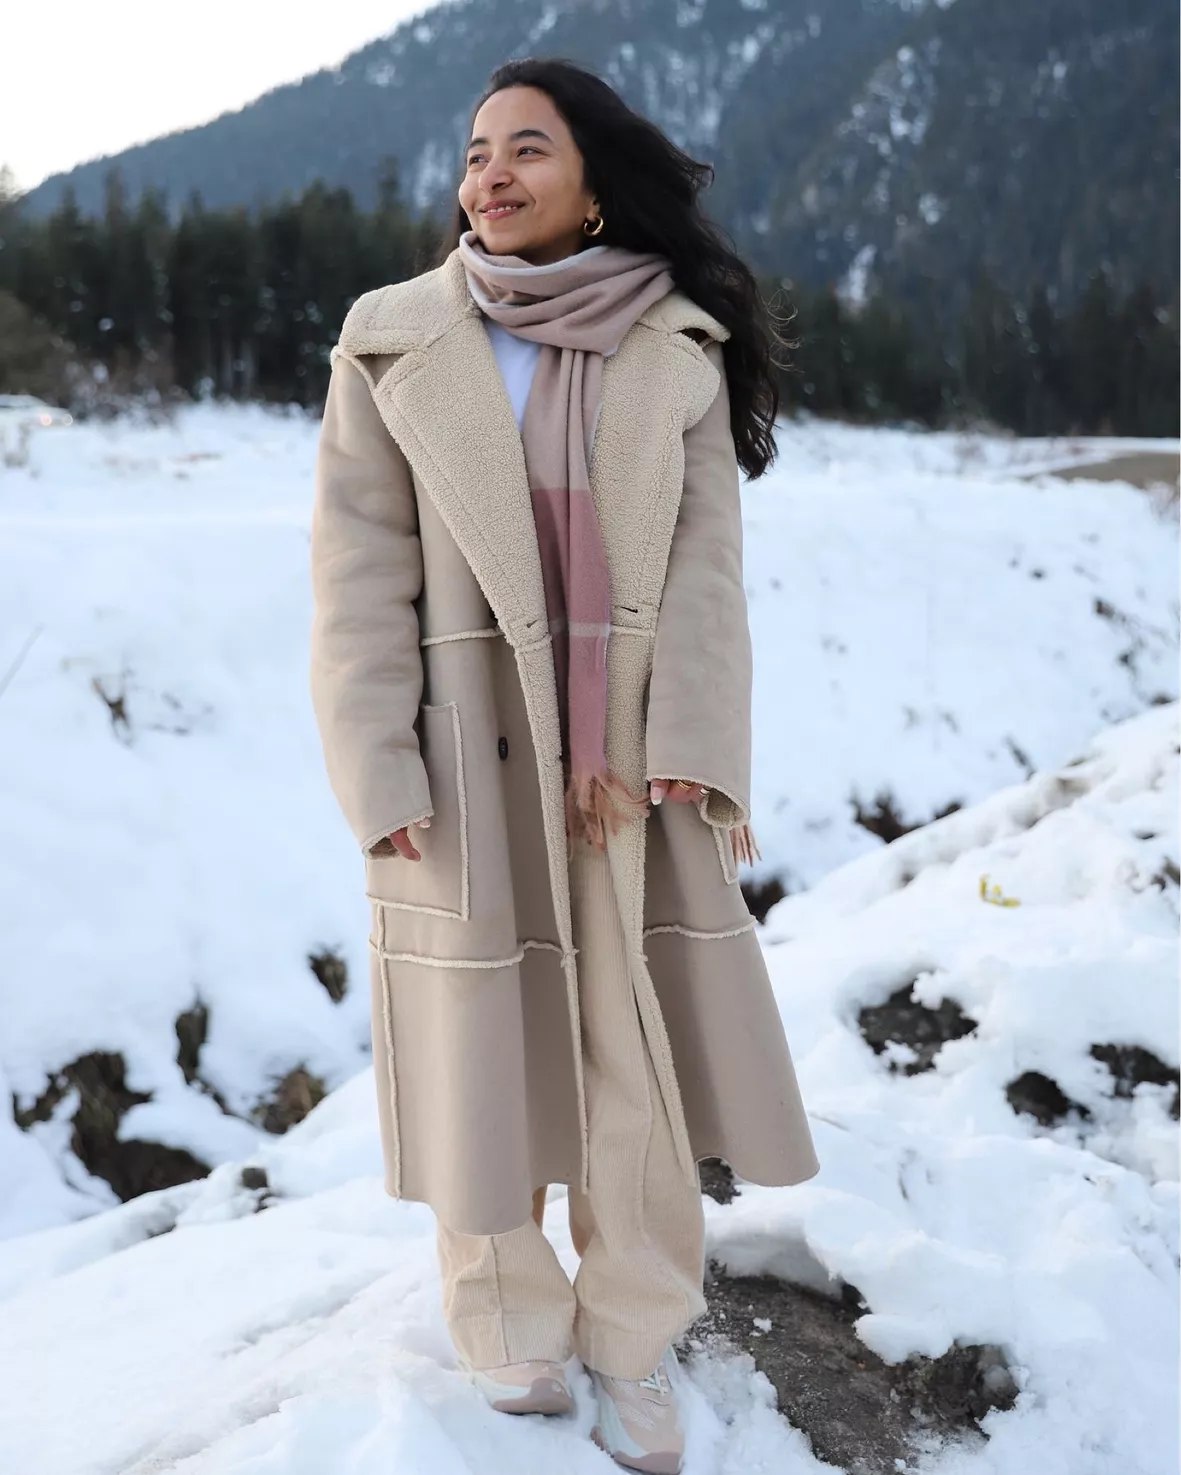 Wander Agio Women's Fashion Scarves Long Shawl Winter Thick Warm